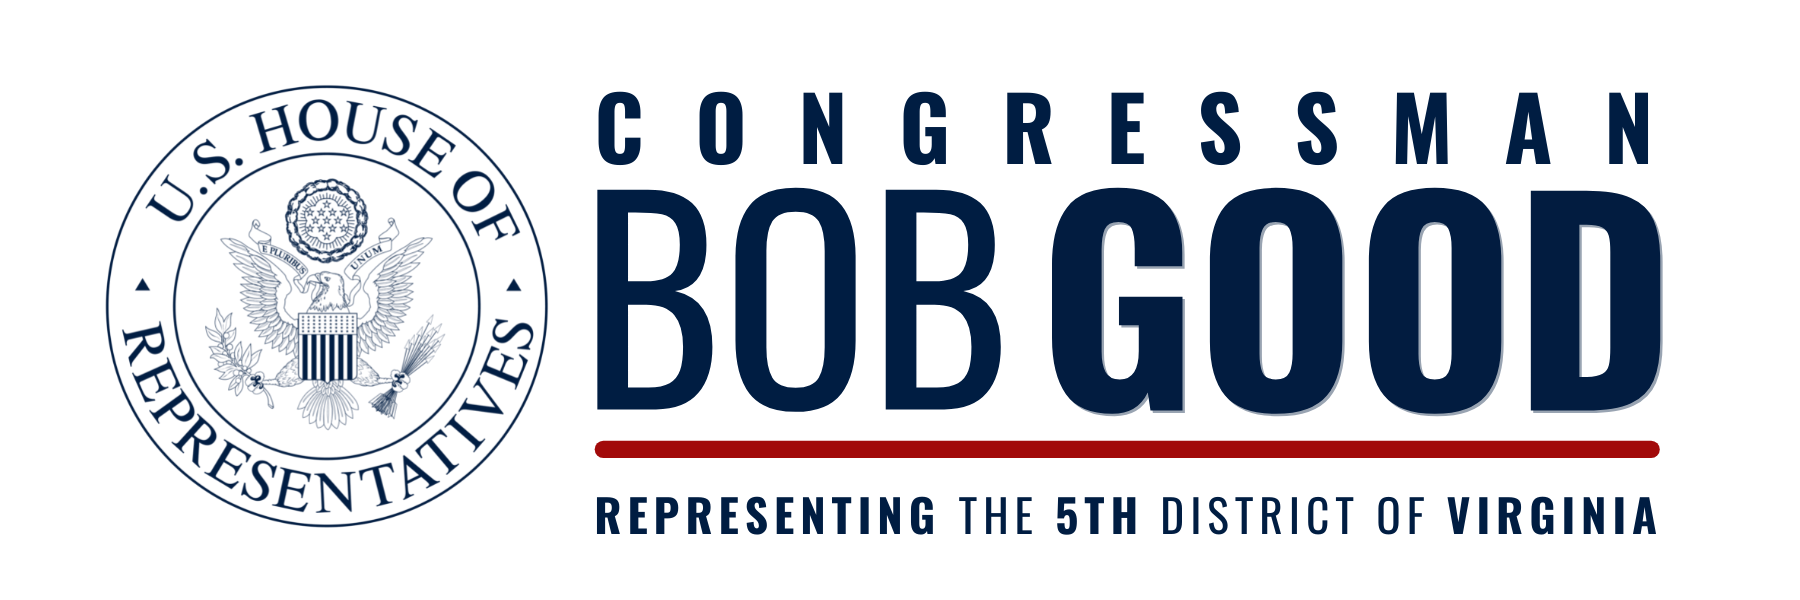 Representative Bob Good logo